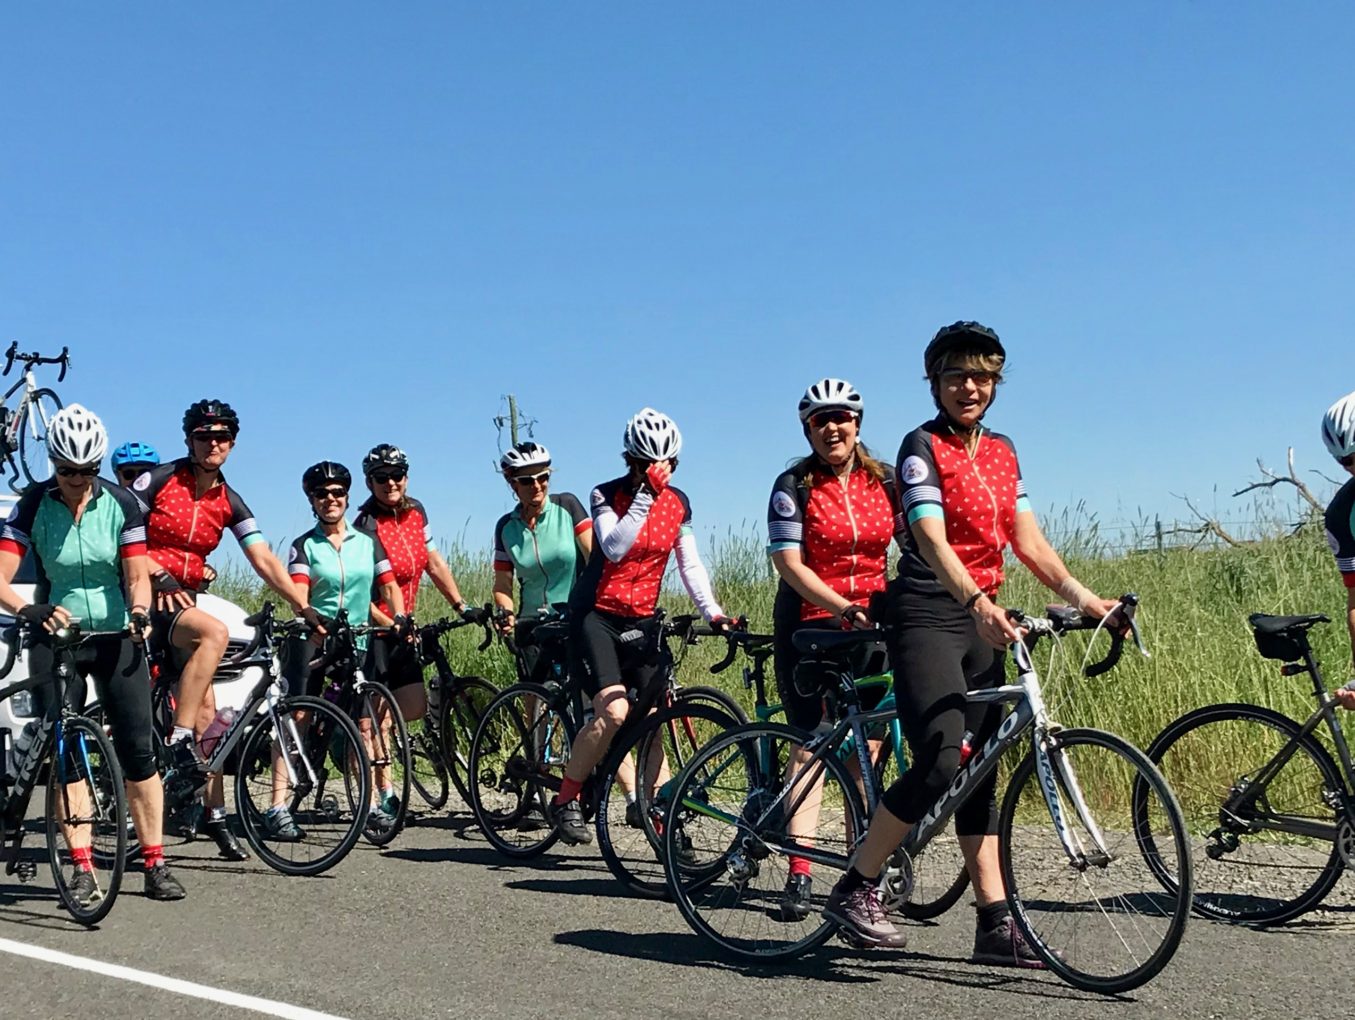 36 women can enjoy FREE cycle classes!